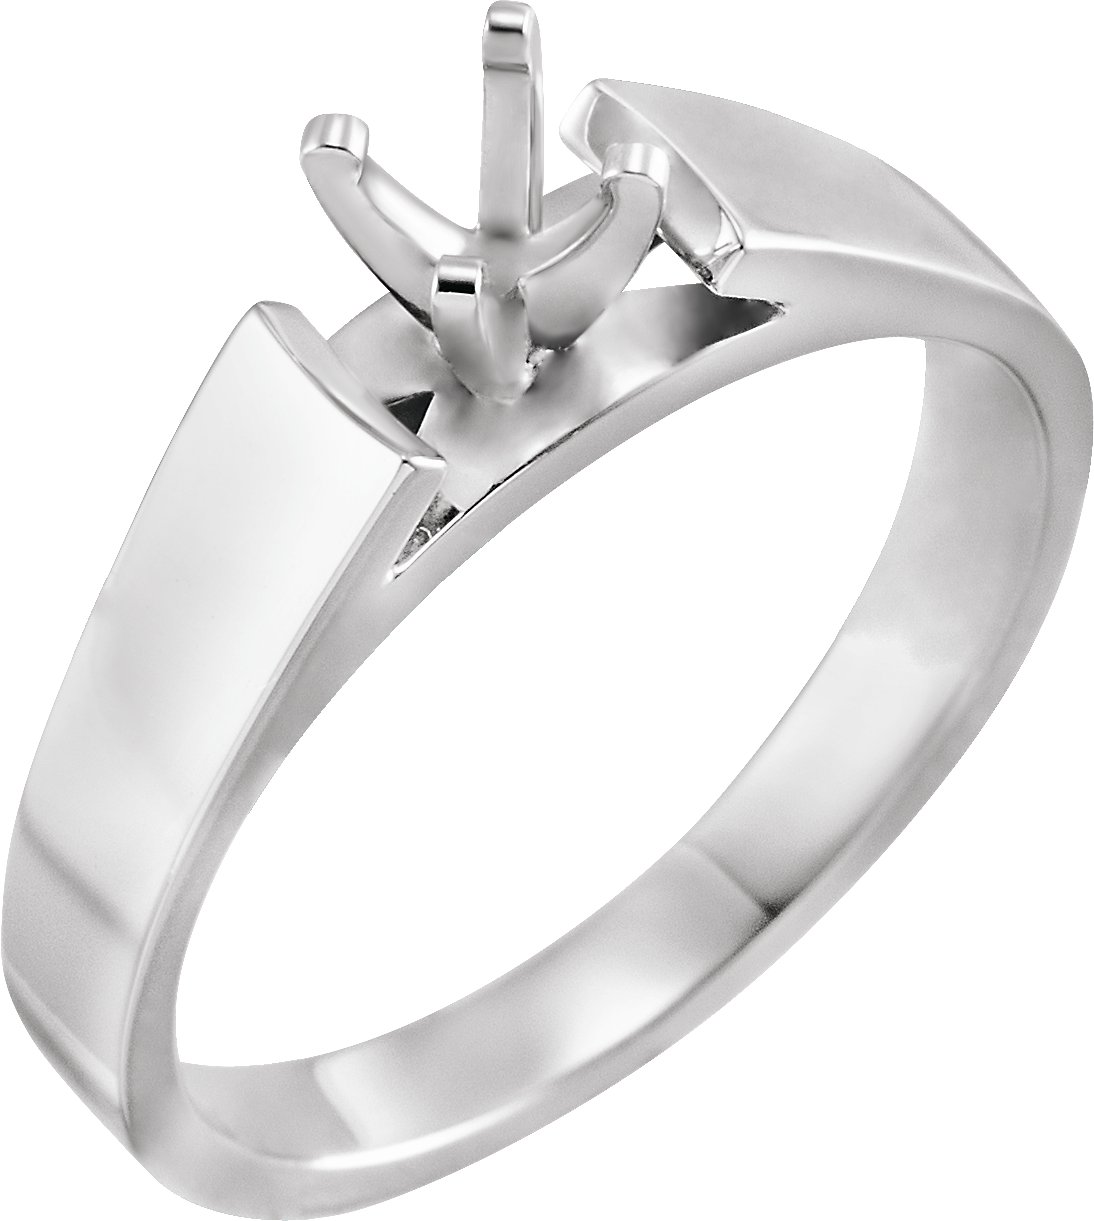 14K White 4 mm Round Engagement Ring Mounting